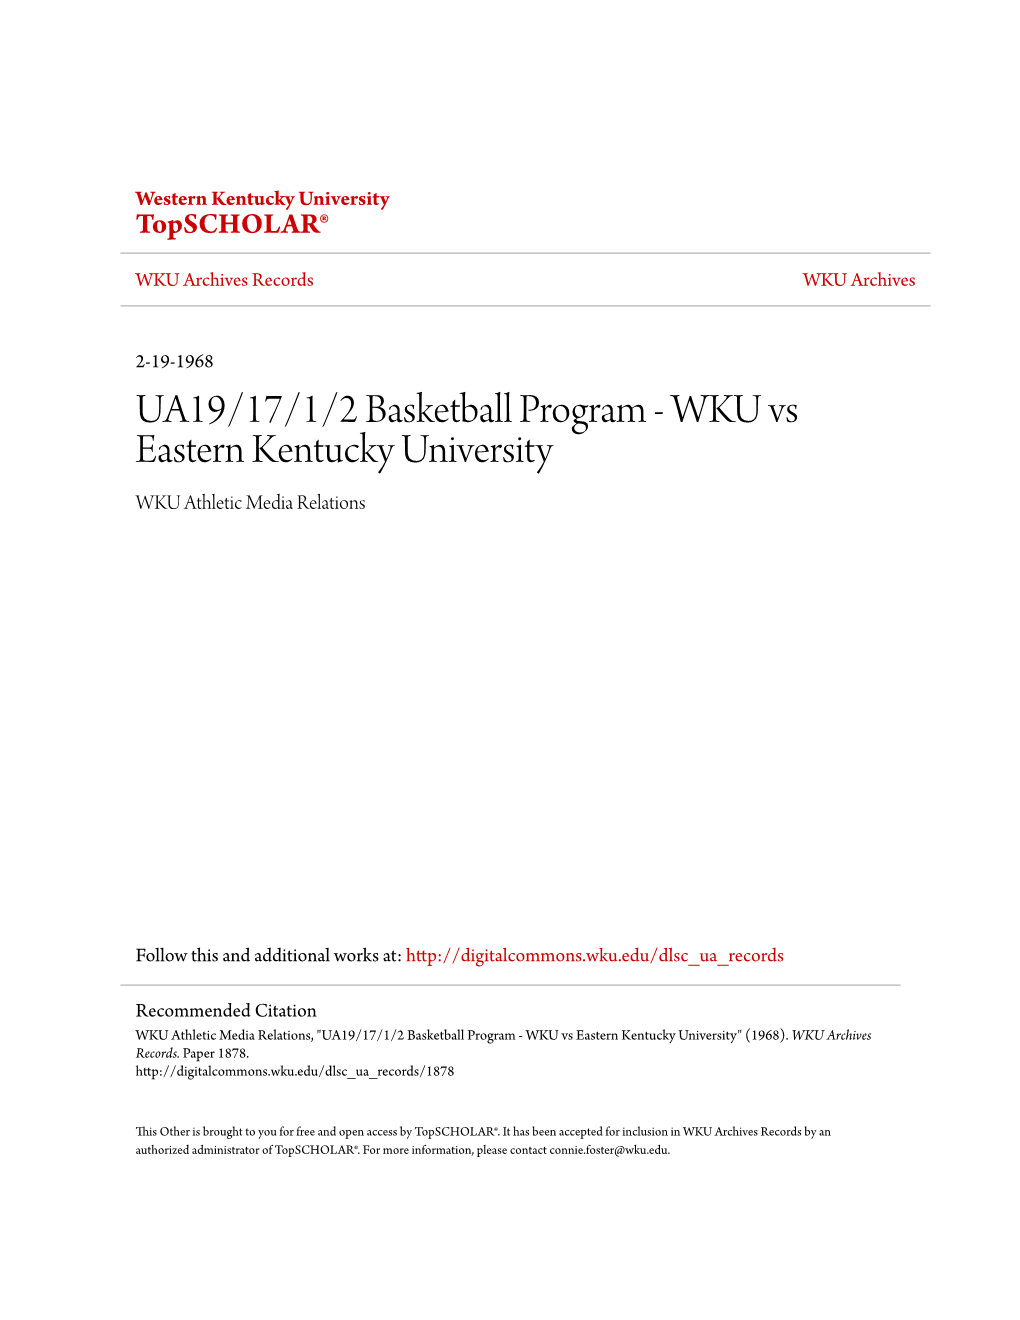 UA19/17/1/2 Basketball Program - WKU Vs Eastern Kentucky University WKU Athletic Media Relations